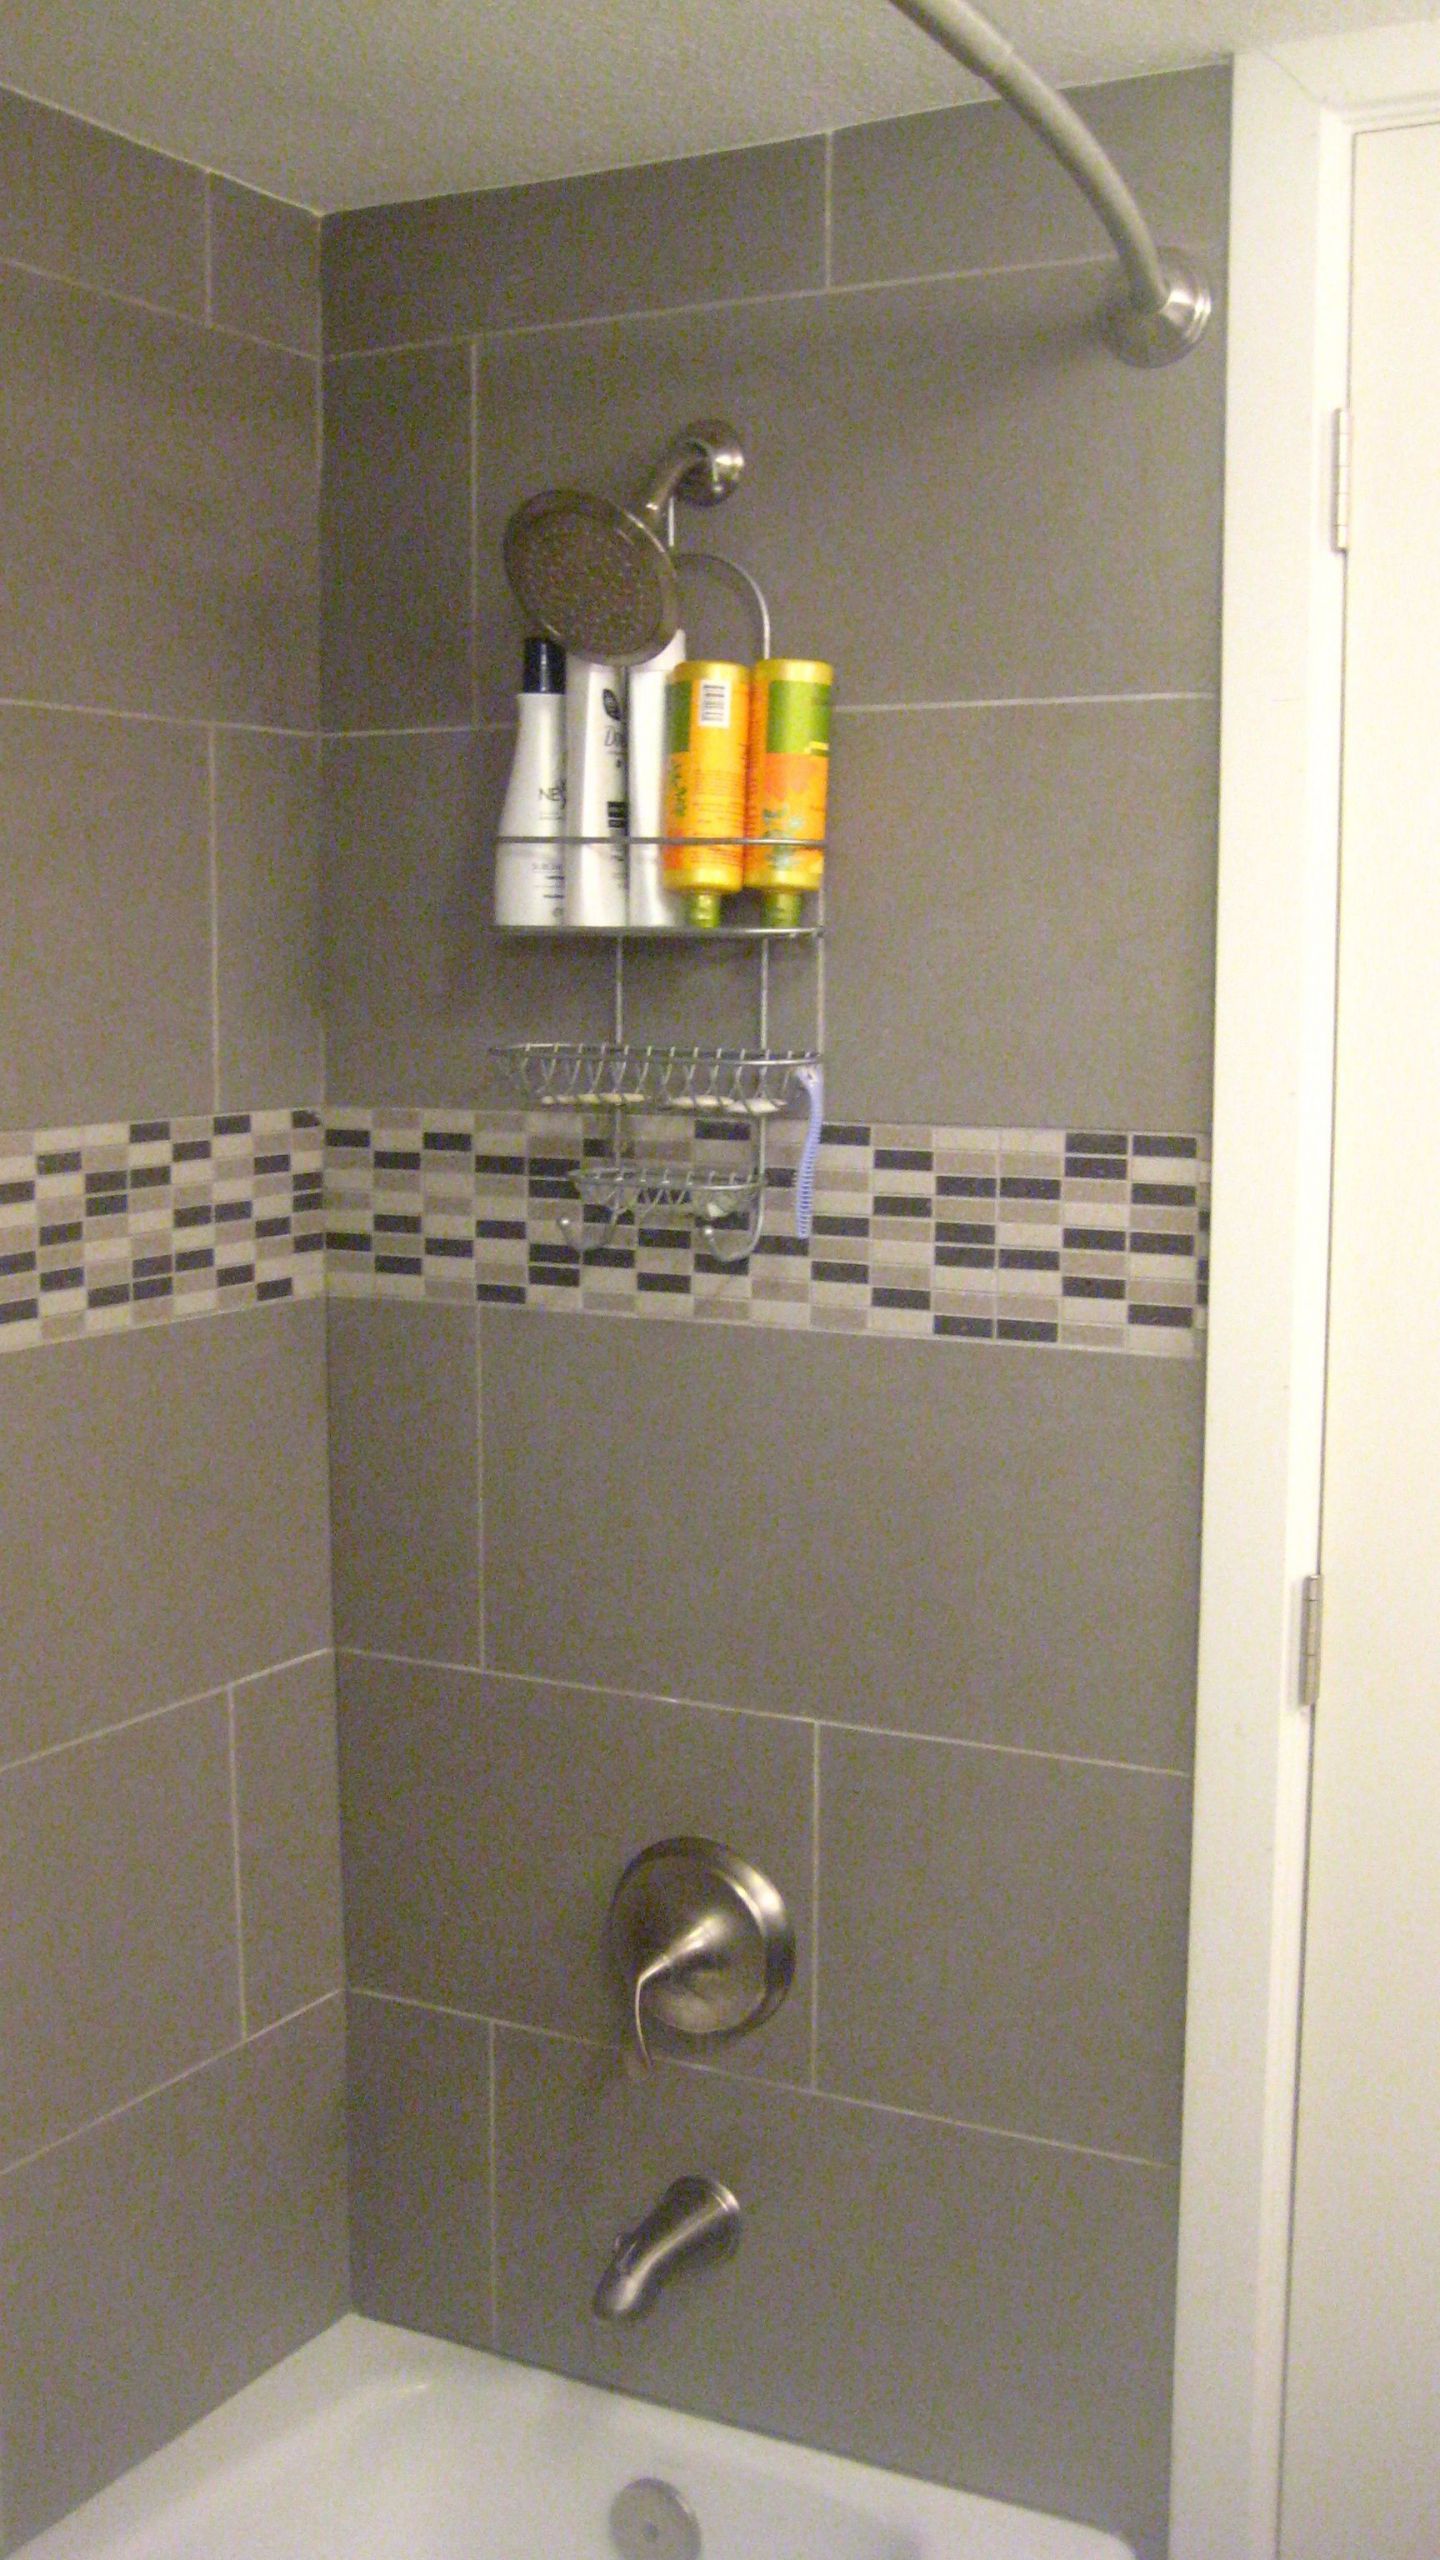 Bathroom Tile Patterns Shower
 Grey 24x12 tile in a subway pattern